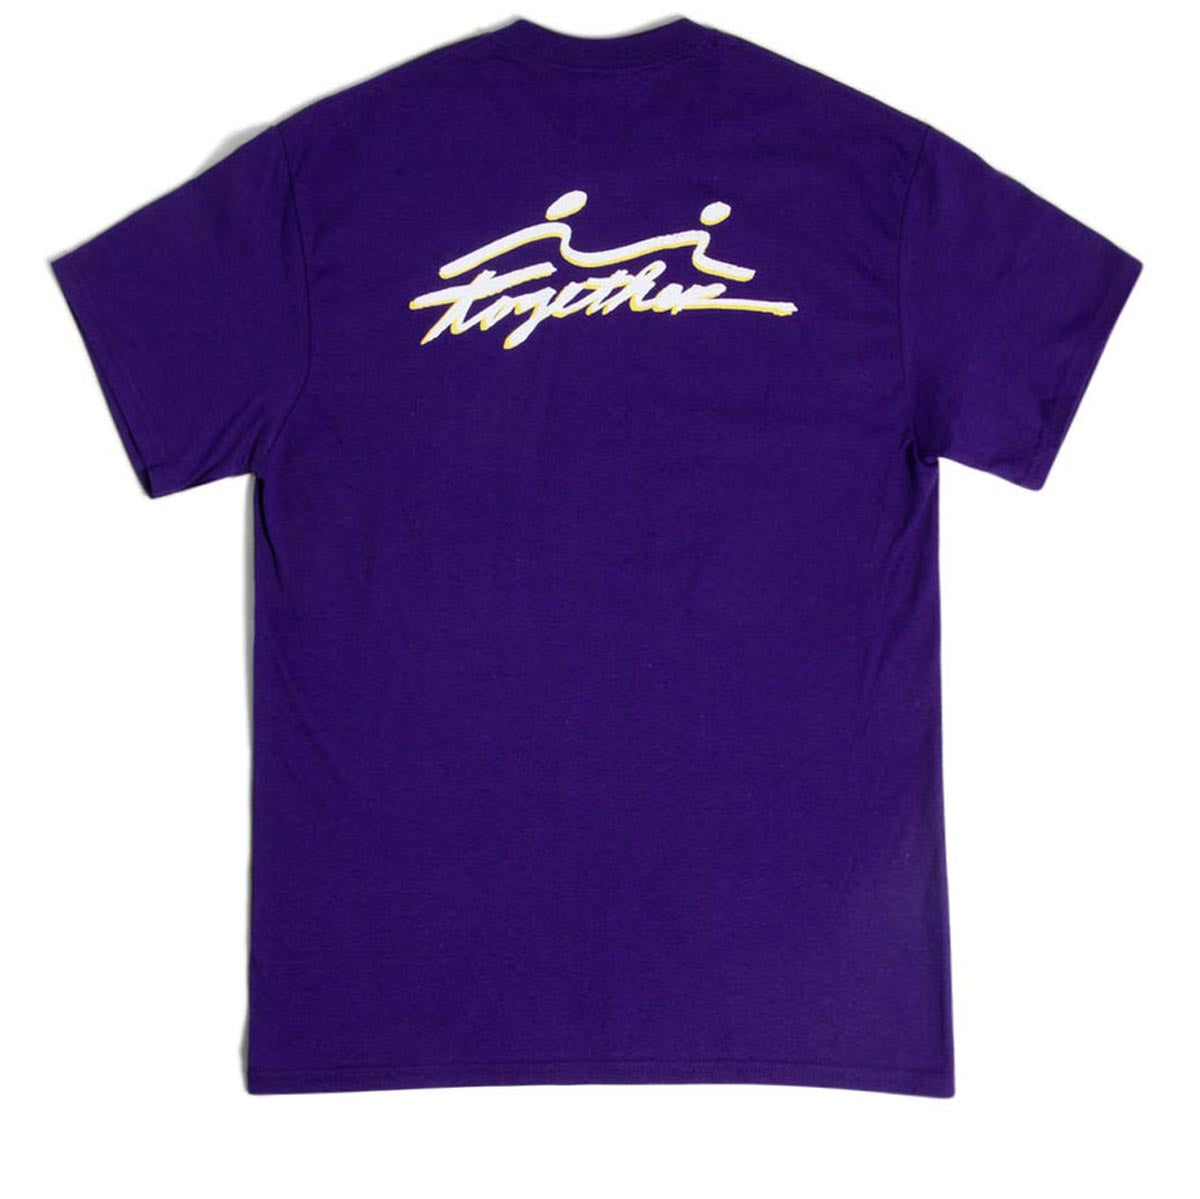 Chocolate Together T-Shirt - Purple image 1